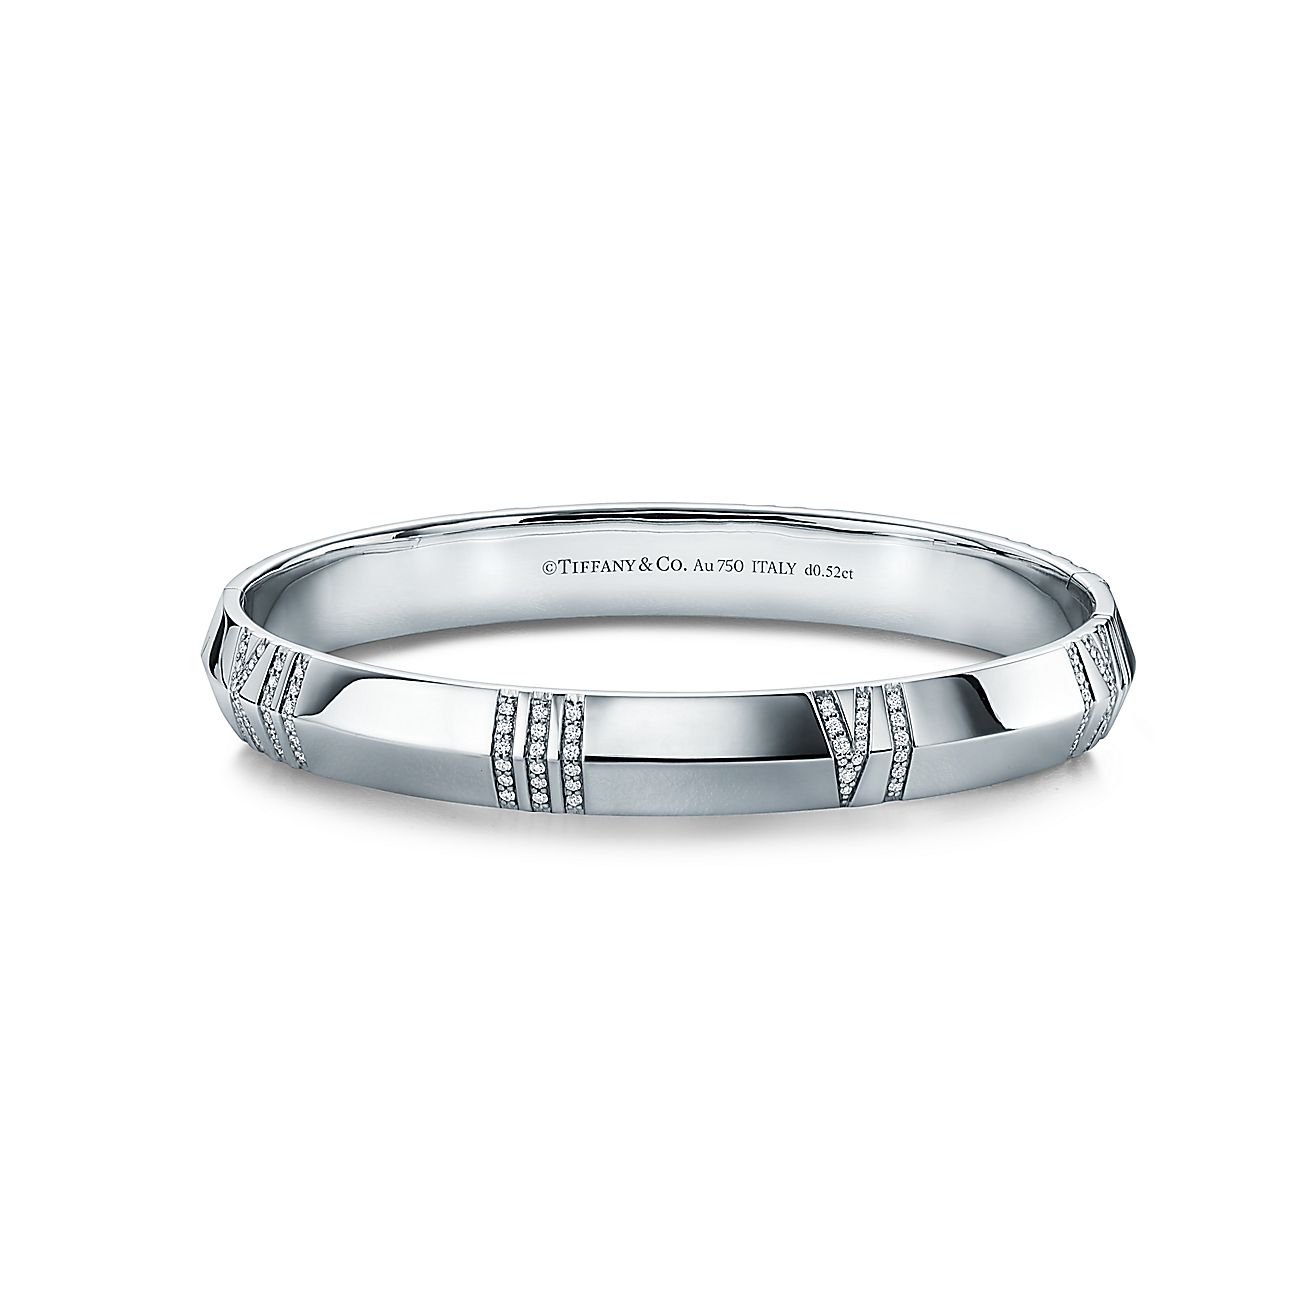 Tiffany & Co Silver Atlas Roman Numeral Cuff Bracelet Bangle Gift Love  Statement